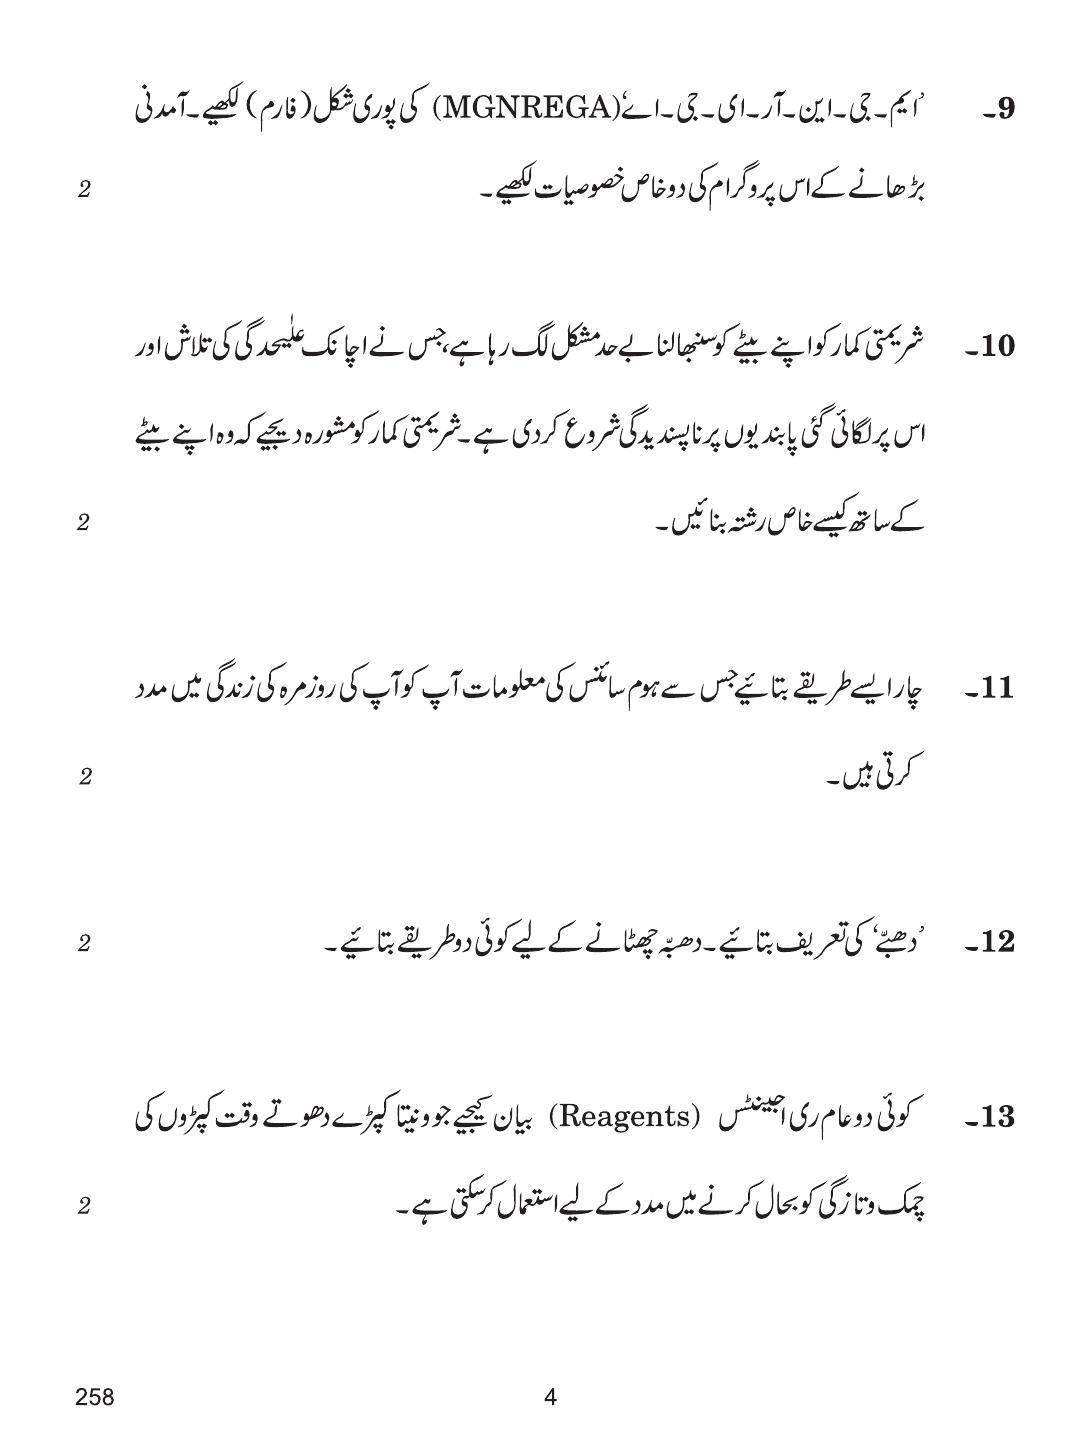 CBSE Class 12 258 (Home Science Urdu) 2018 Question Paper - Page 4